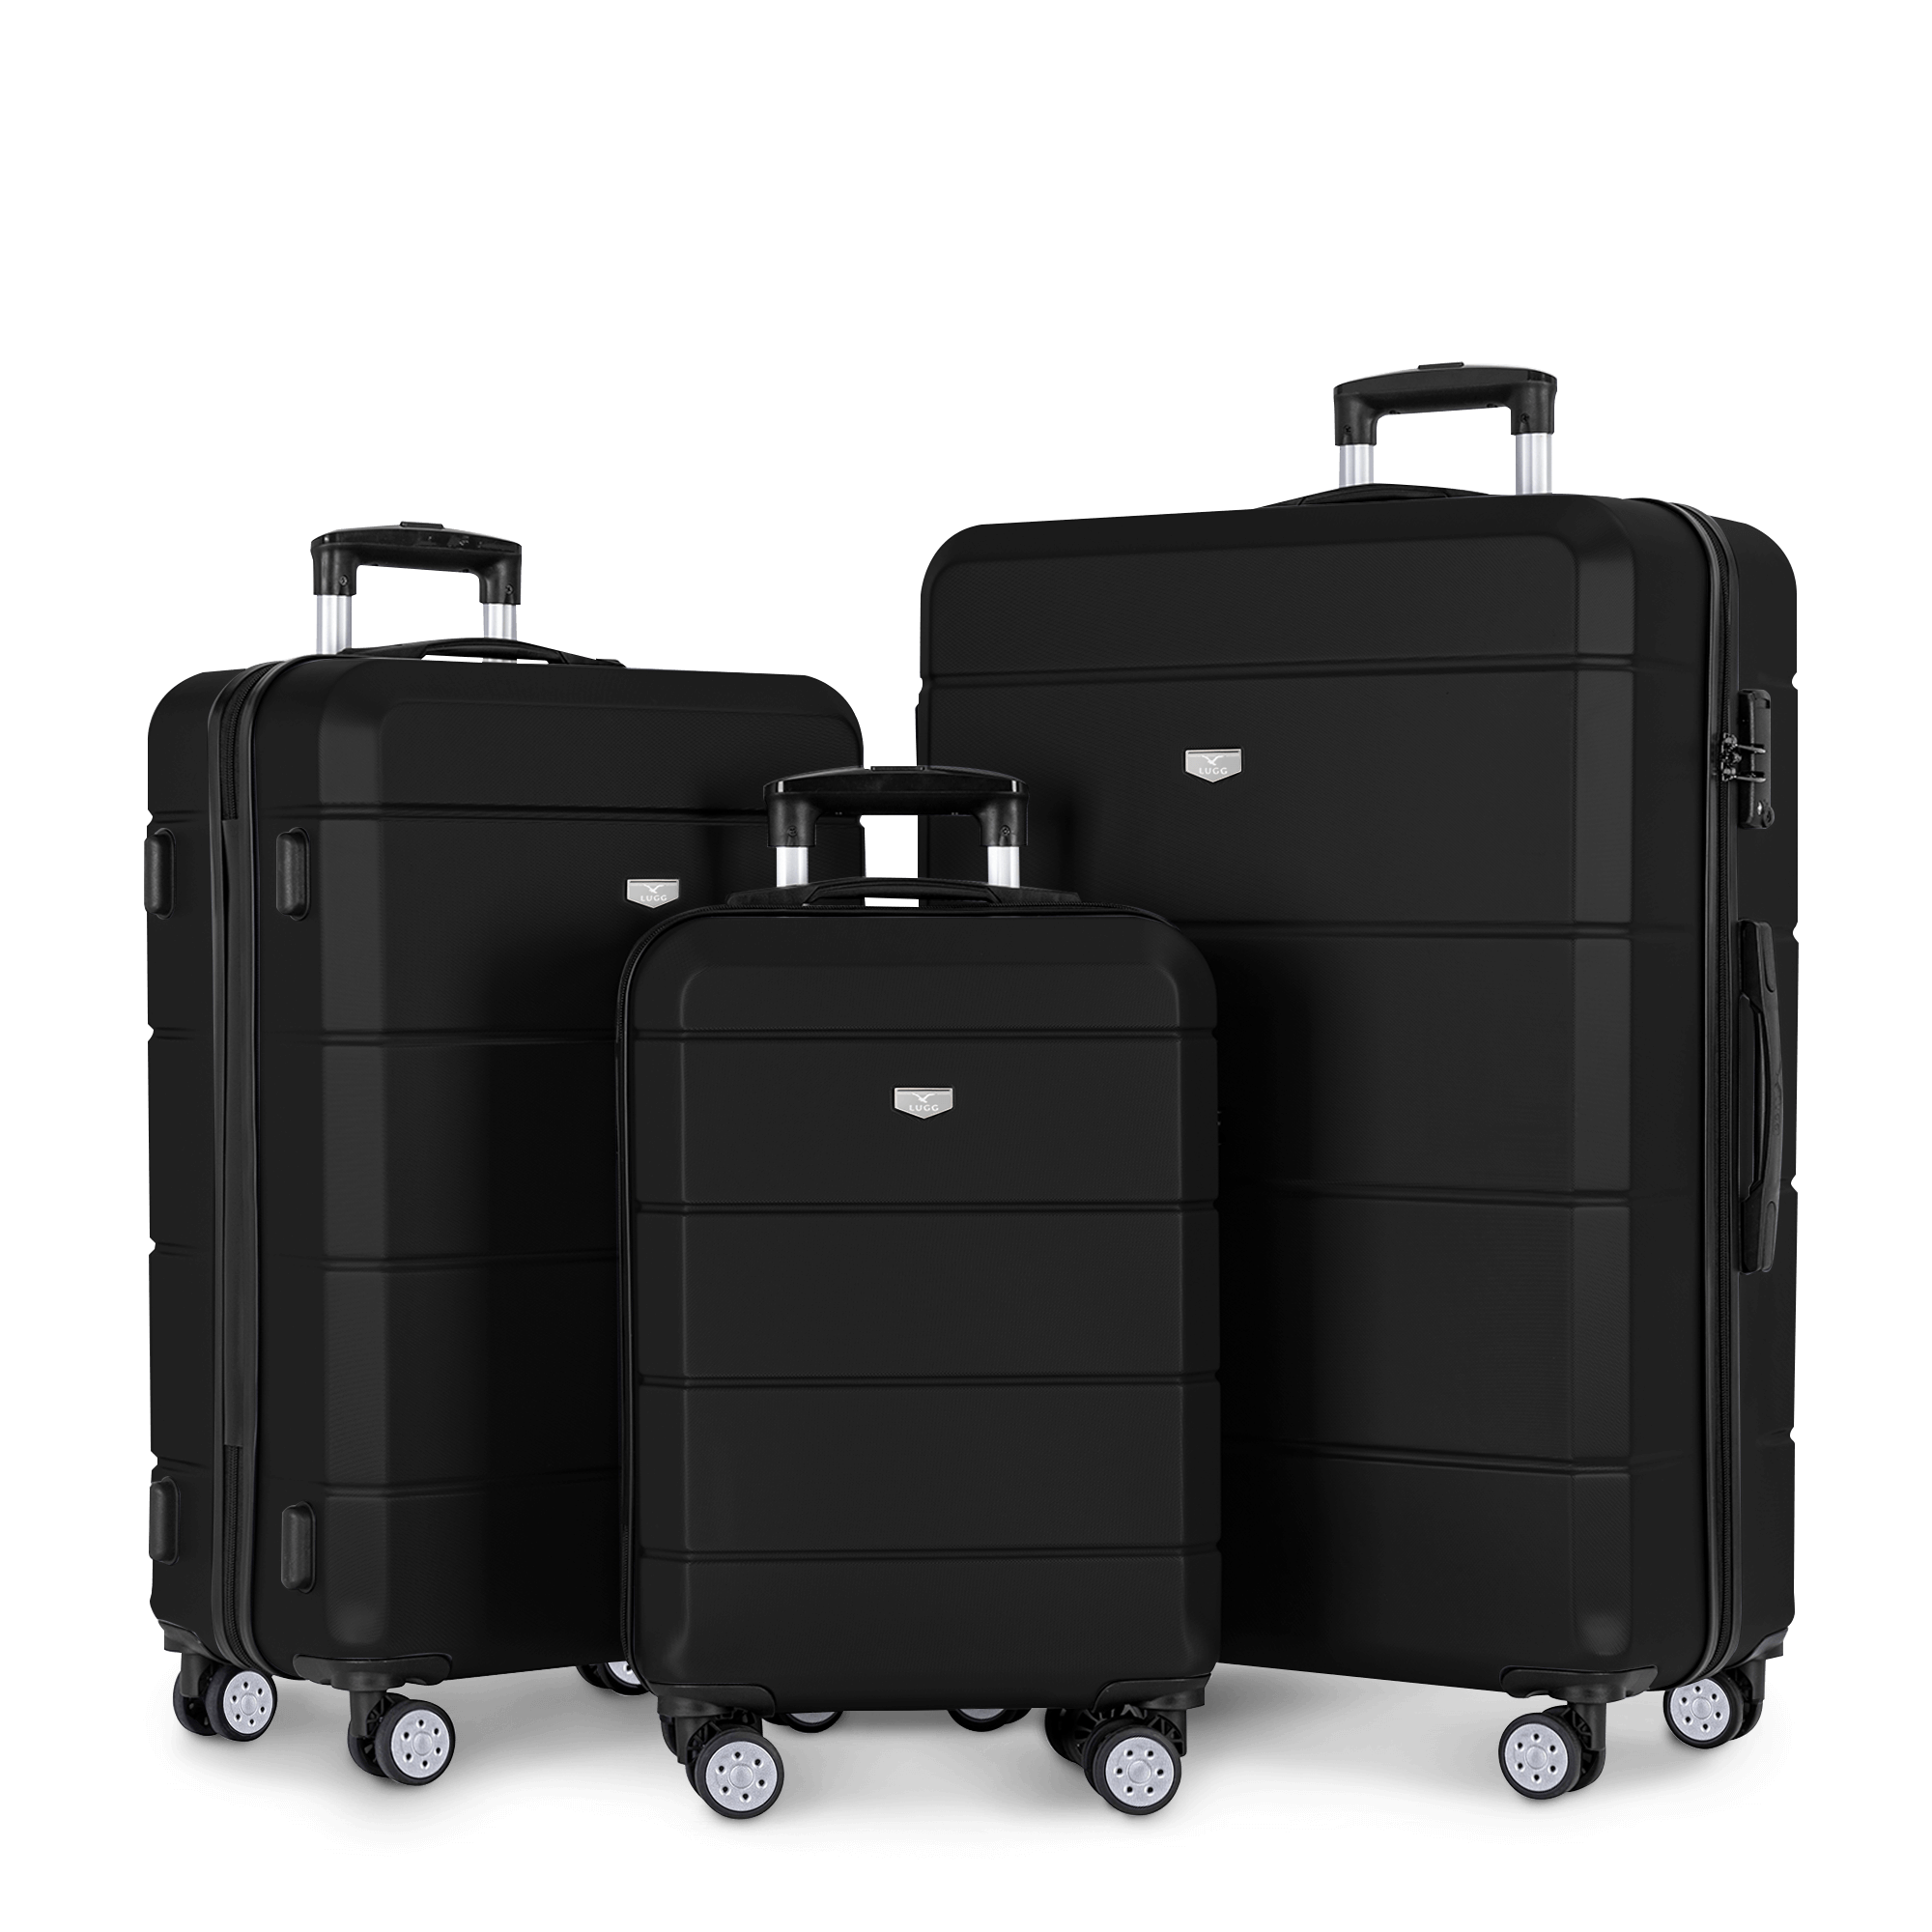 Jetset 3pc Suitcase Set in Black